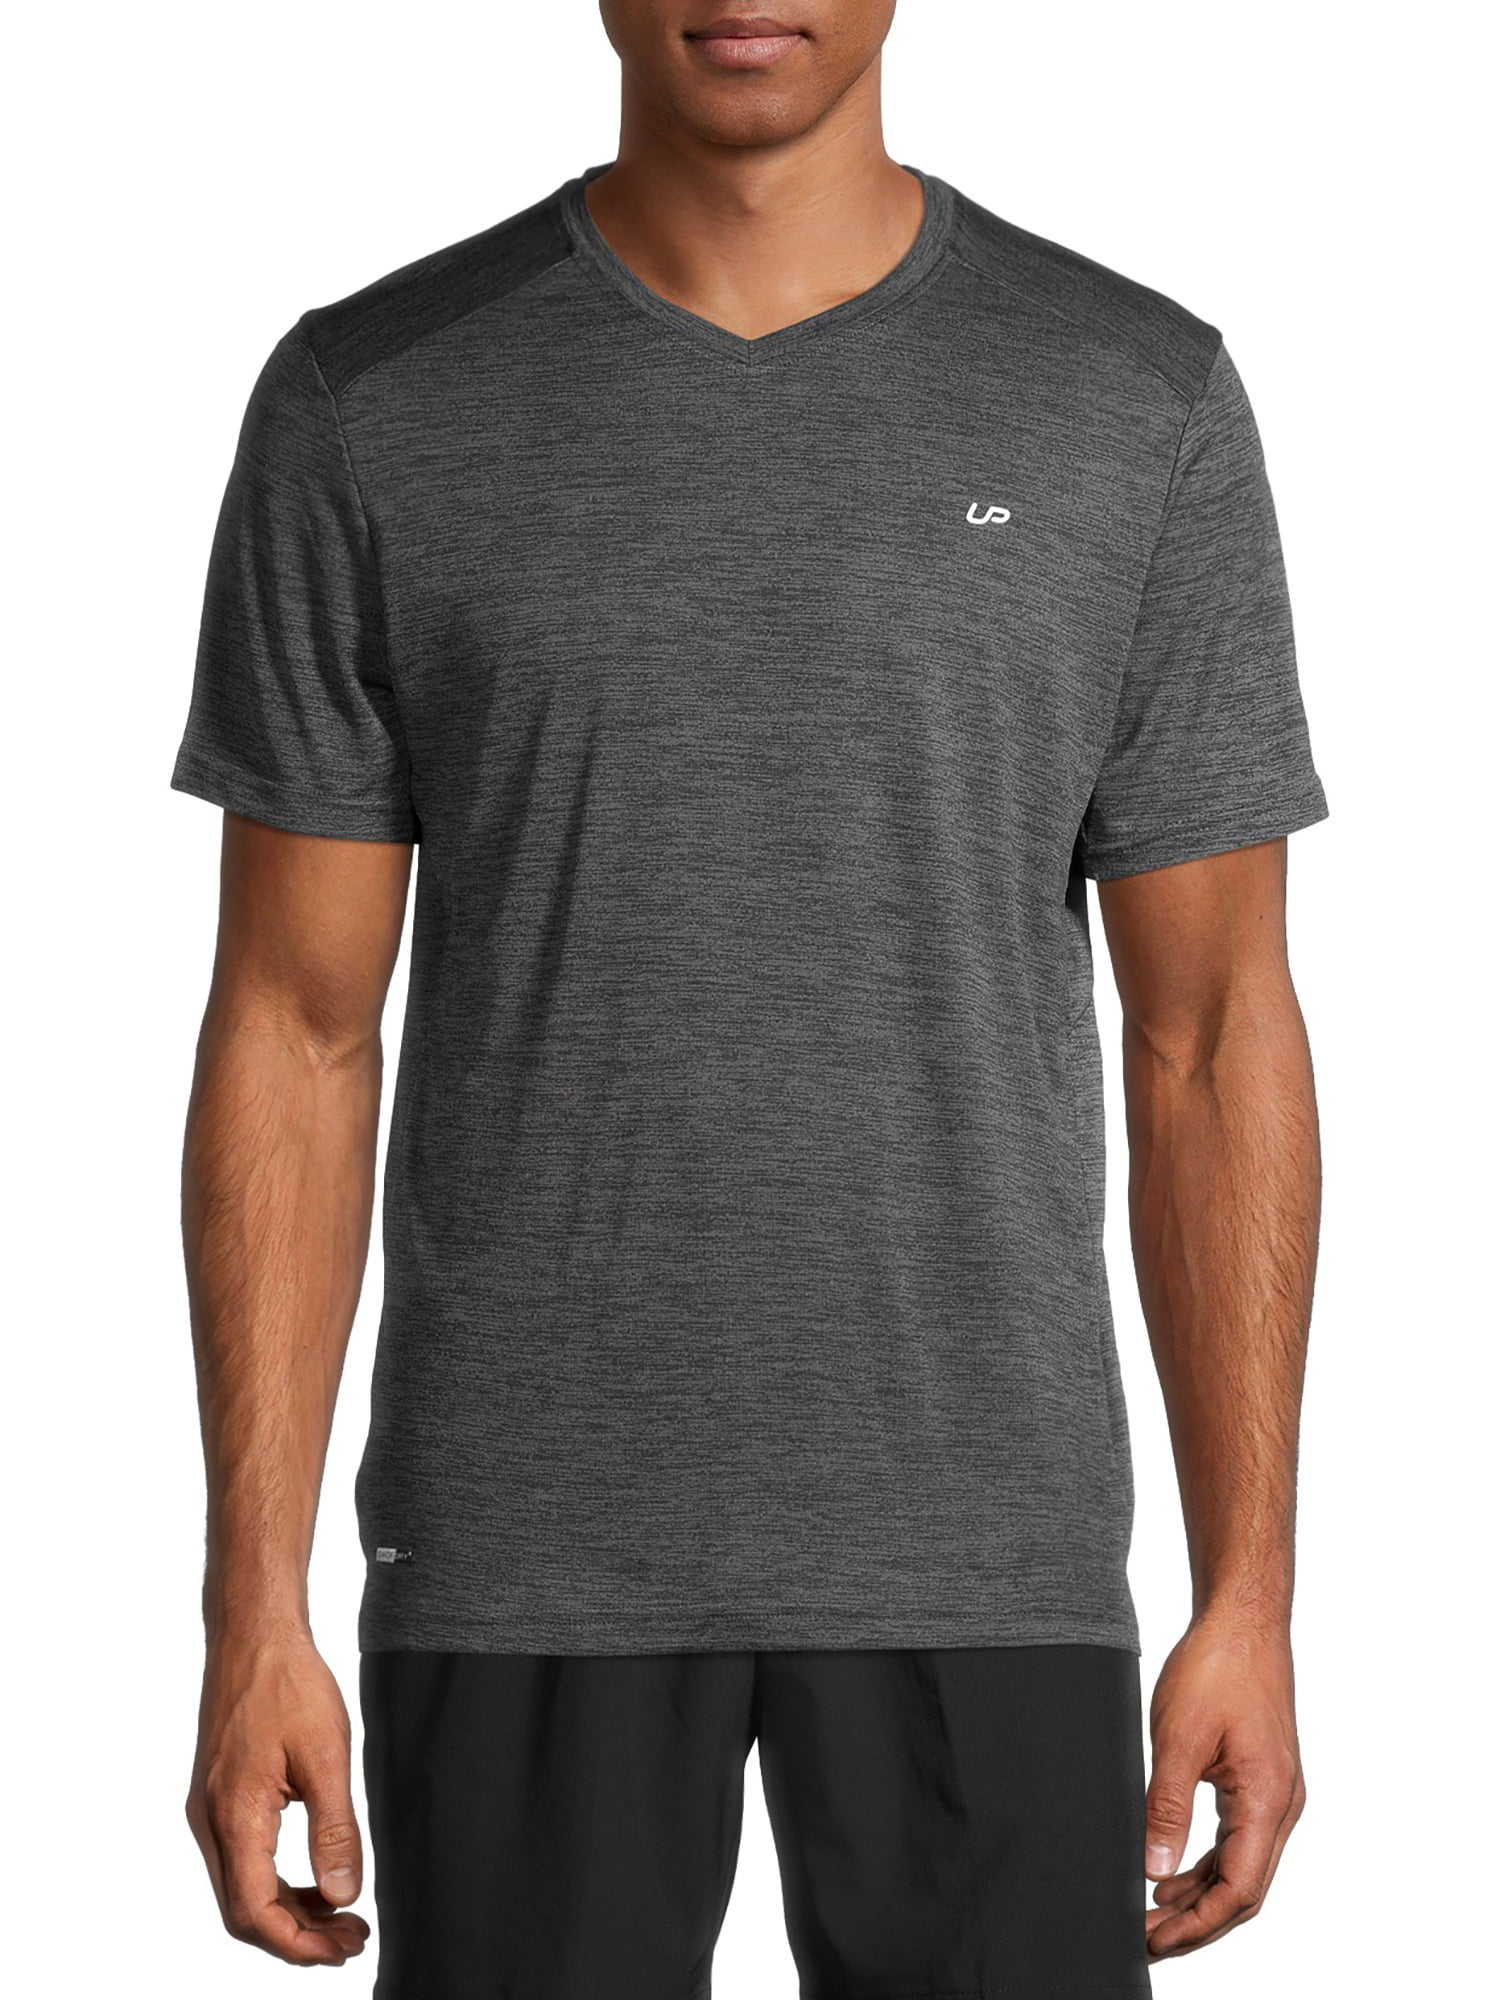 Unipro Men's Heather Wicking V-Neck T-Shirt, up to Size 2XL - Walmart.com